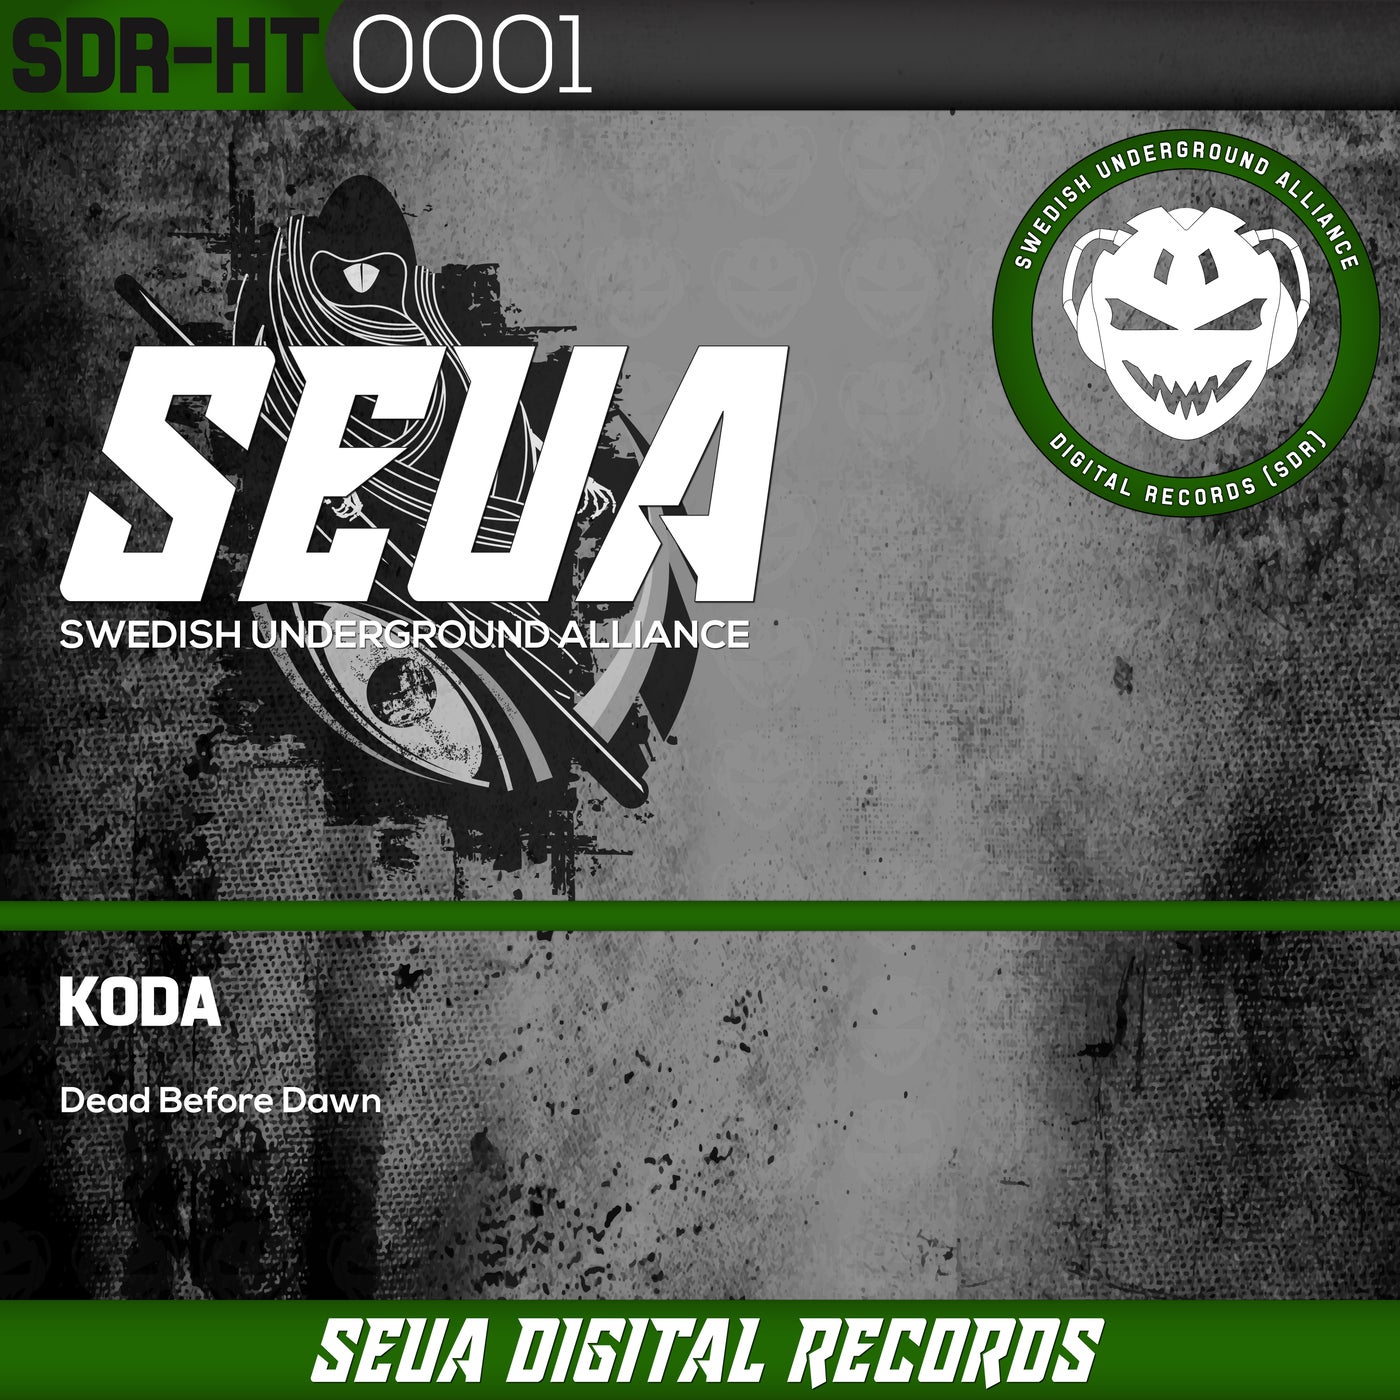 Koda - Dead Before Dawn [SEUA Digital Records]